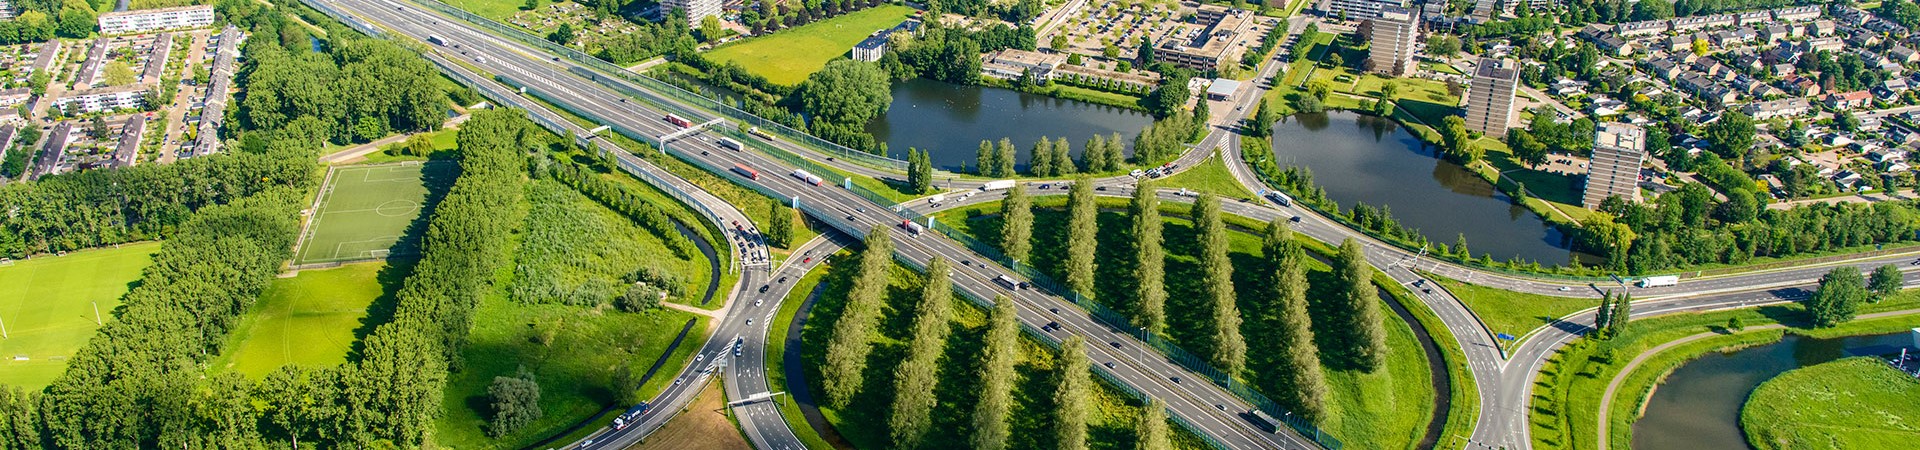 Arnhem-Nijmegen Green Metropolitan Region